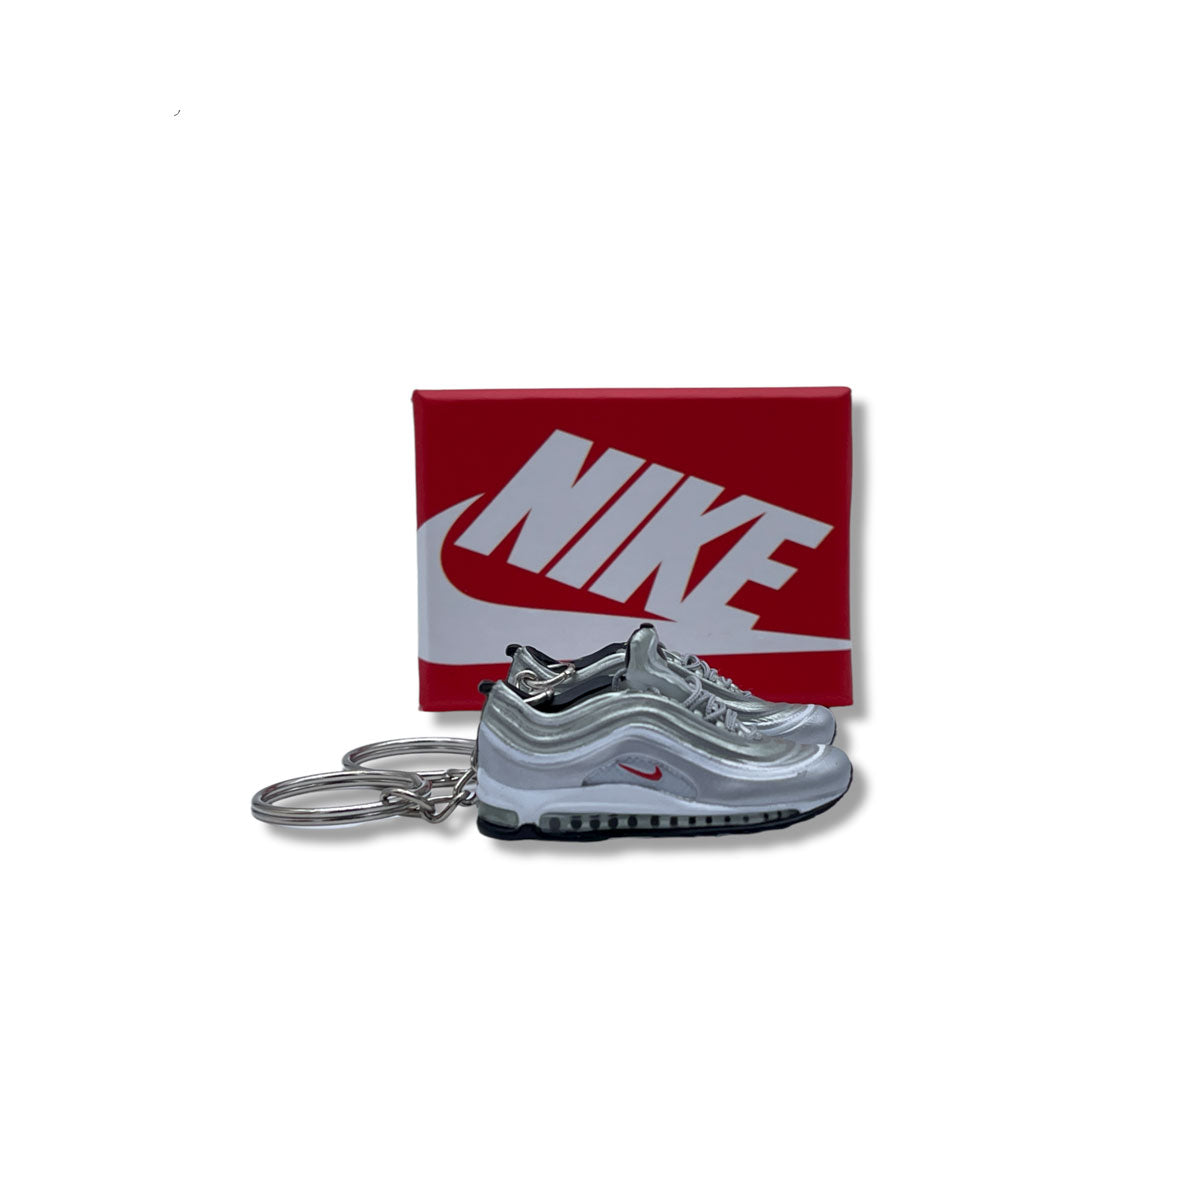 3D Sneaker Keychain- Air Max 97 OG Metallic Silver Bullet Pair